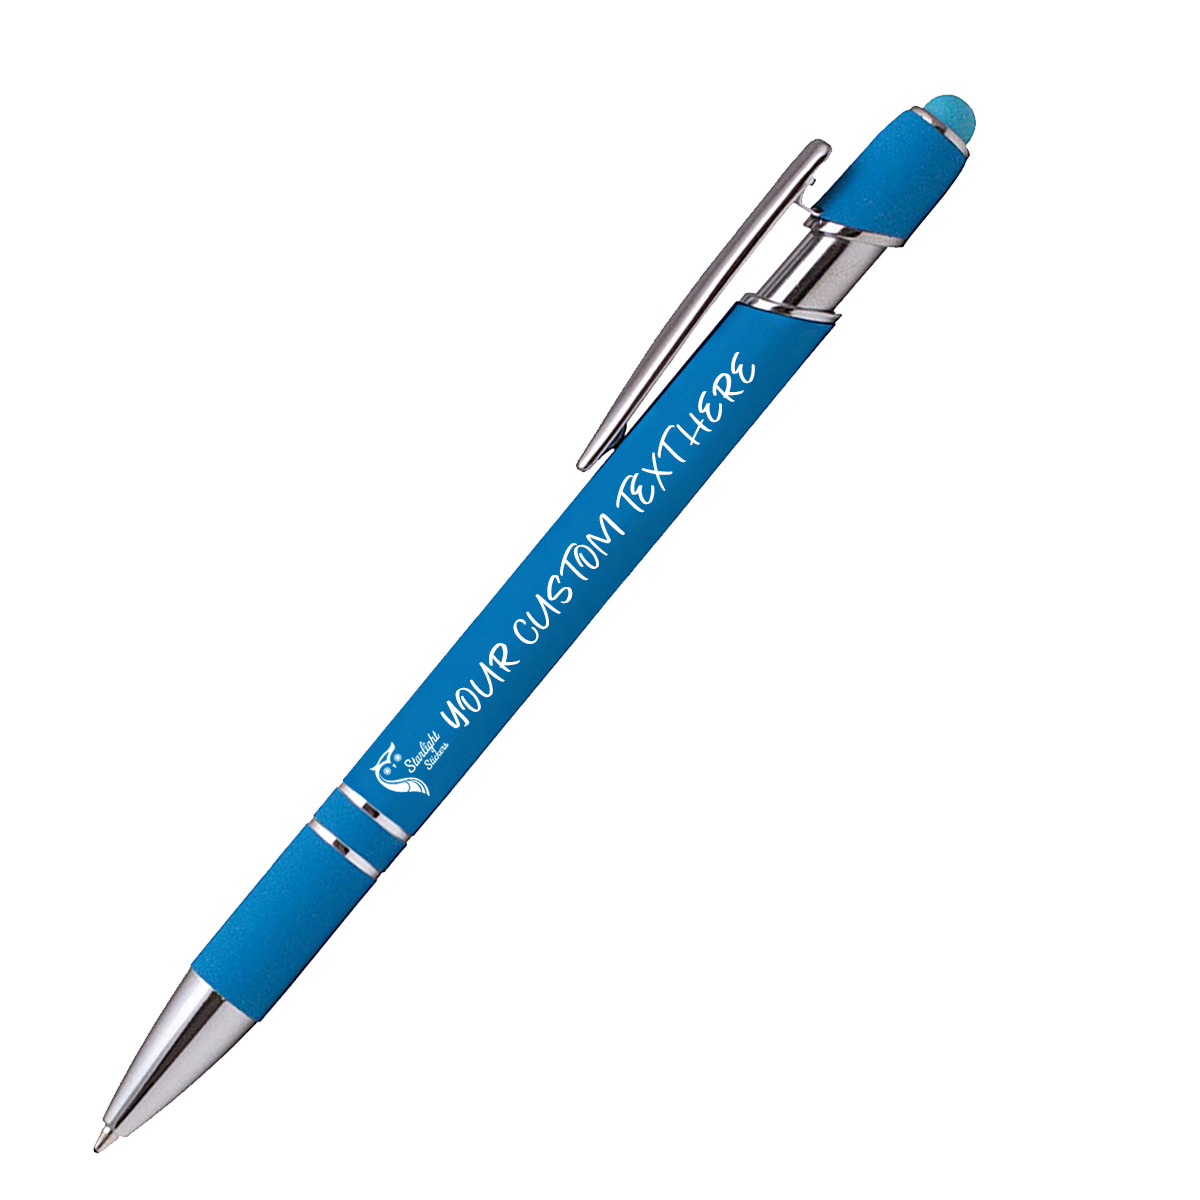 Personalize Design Custom Laser Engraved Pens with Stylus | 48 pcs Set